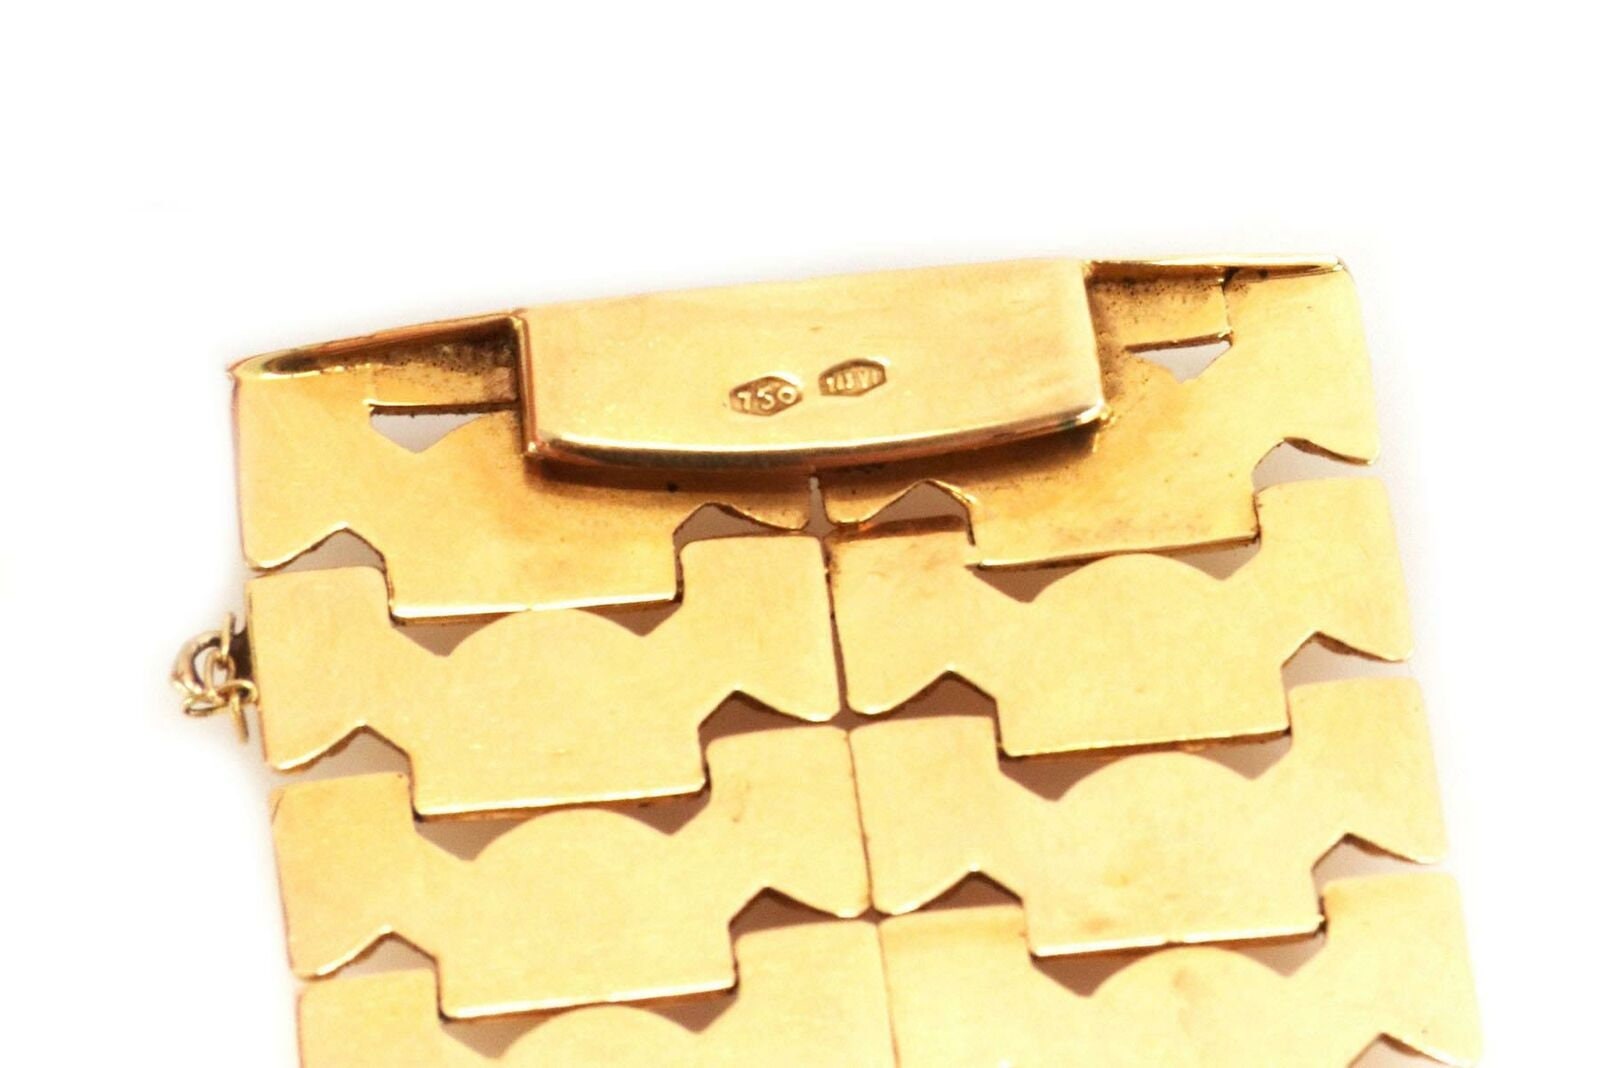 18K Gold Shaped Buckle Bracelet … curated on LTK